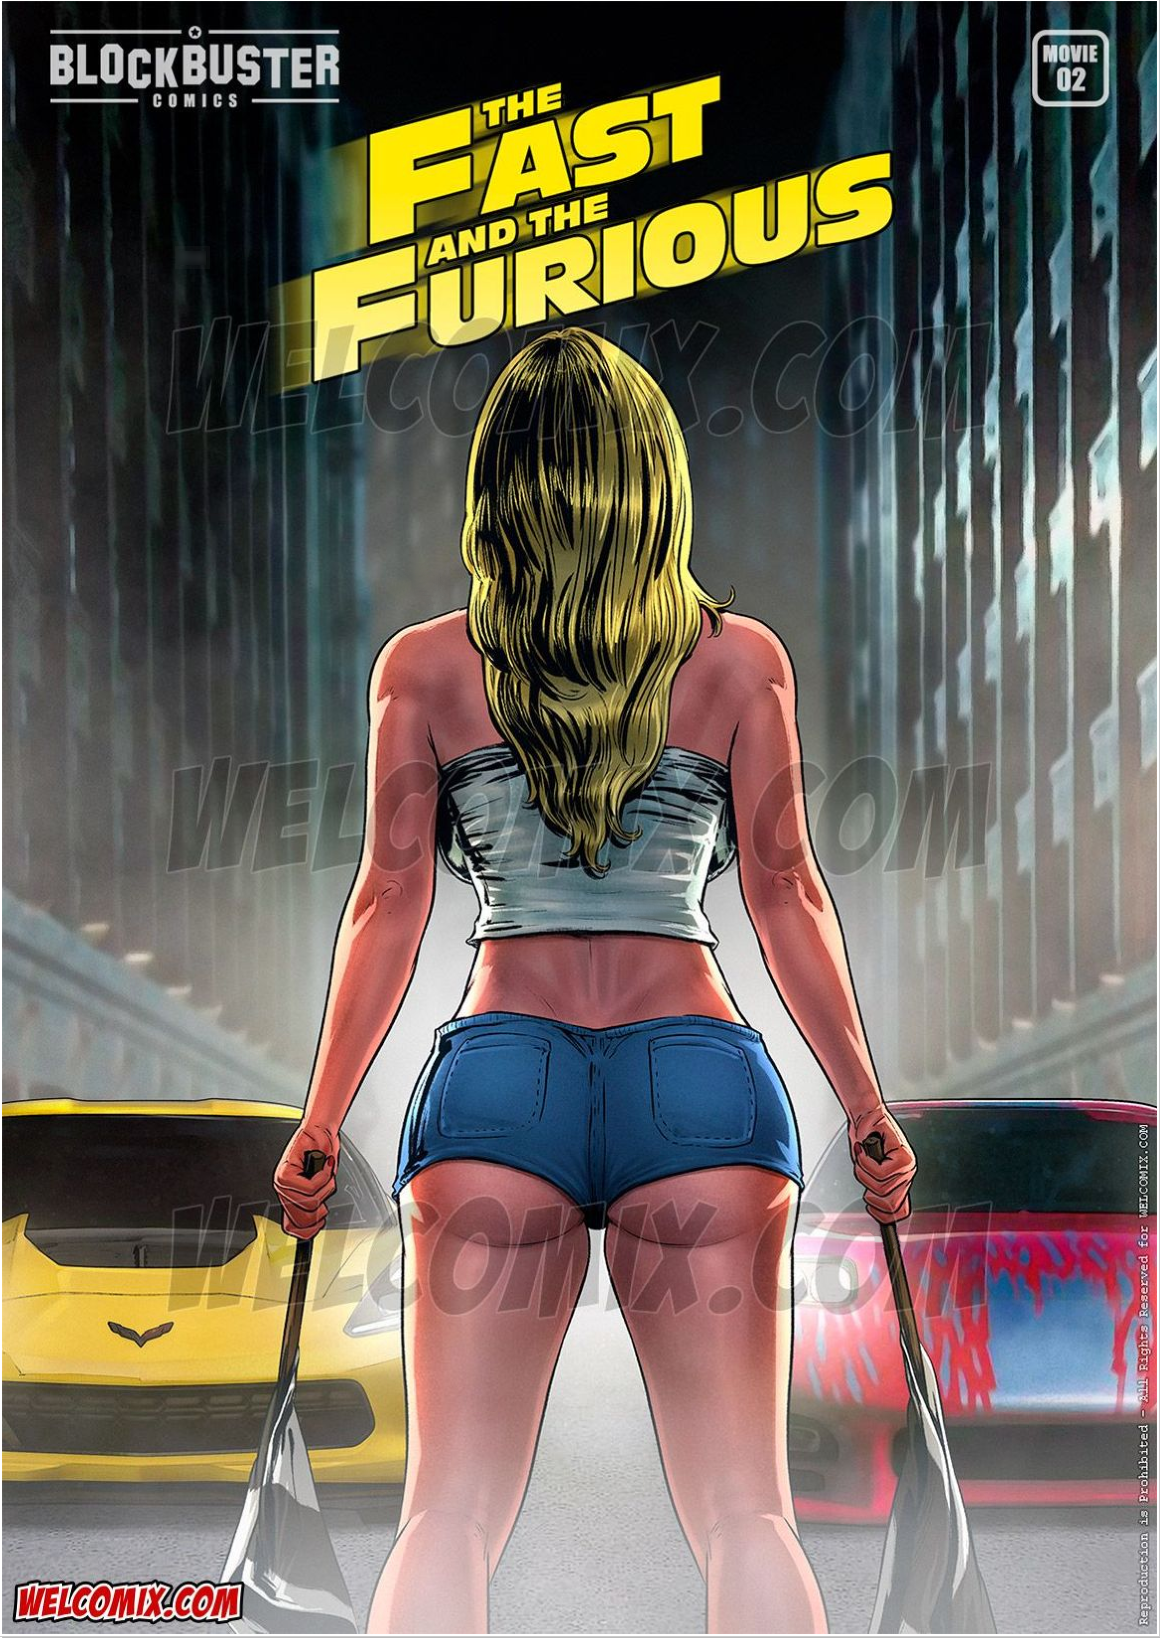 SureFap xxx porno The Fast and the Furious - [WelComix] - BlockBuster Comics 02 - The Fast and The Furious